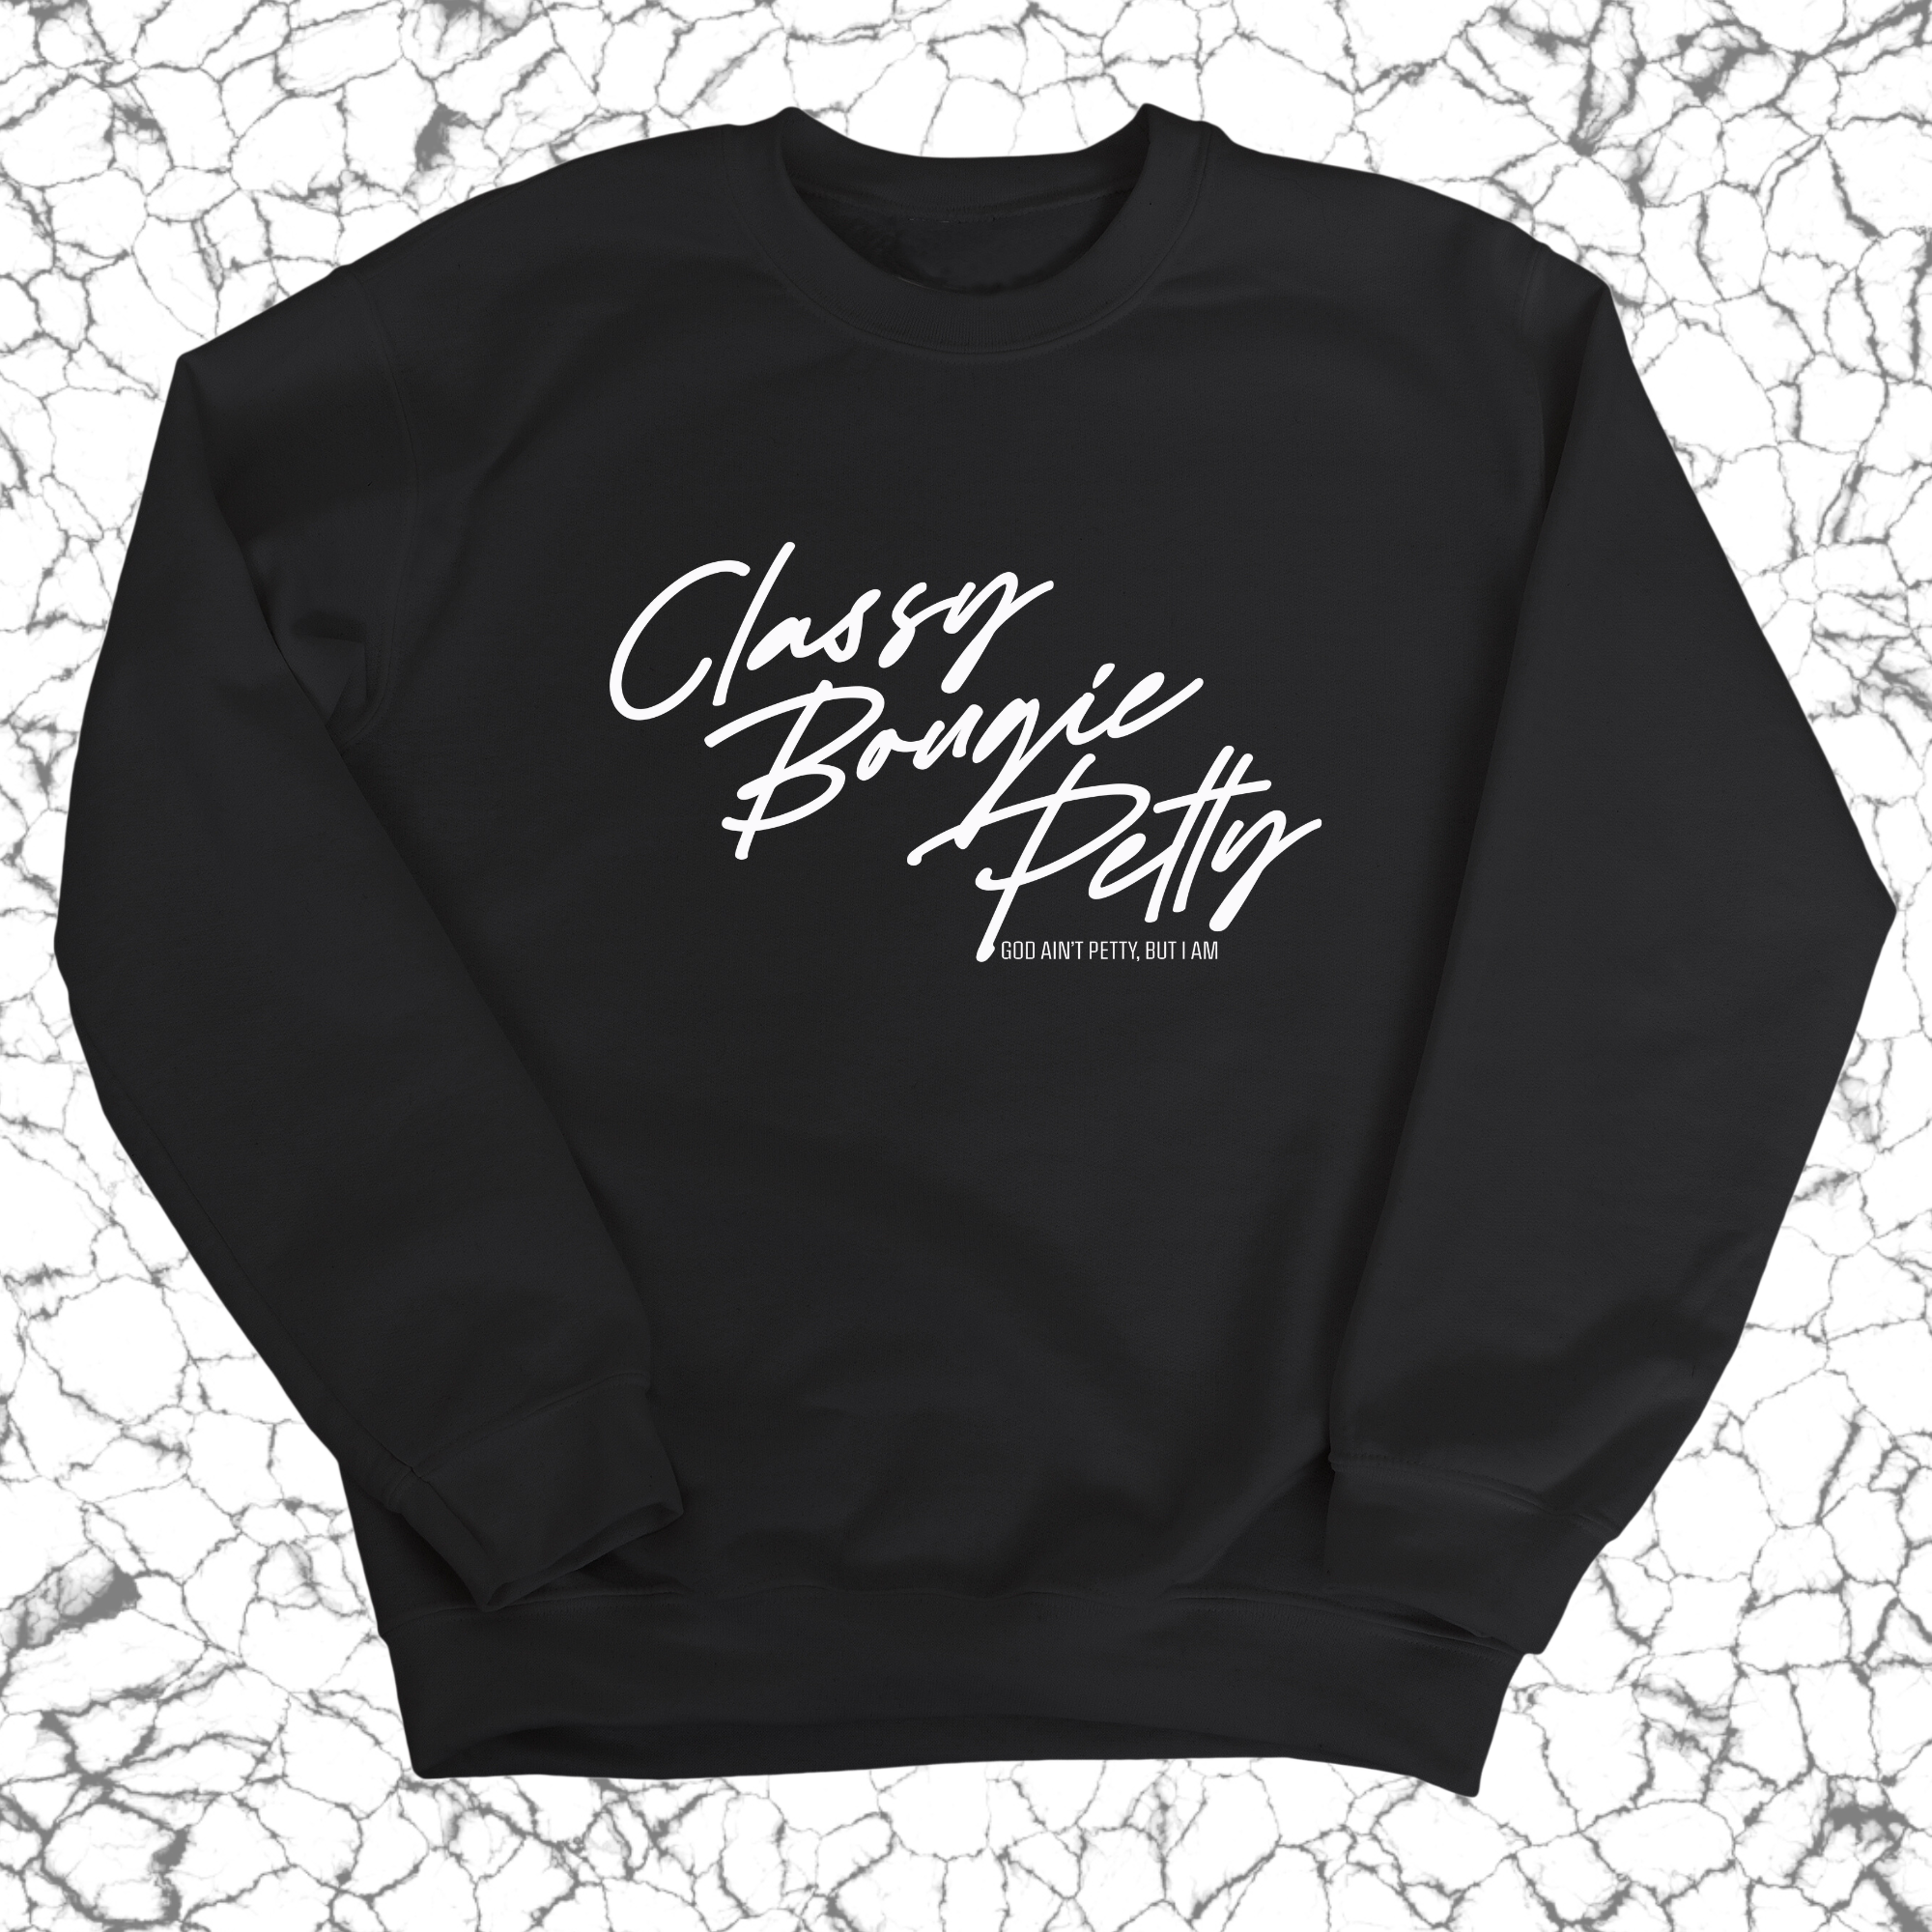 Classy Bougie Petty Unisex Sweatshirt-Sweatshirt-The Original God Ain't Petty But I Am